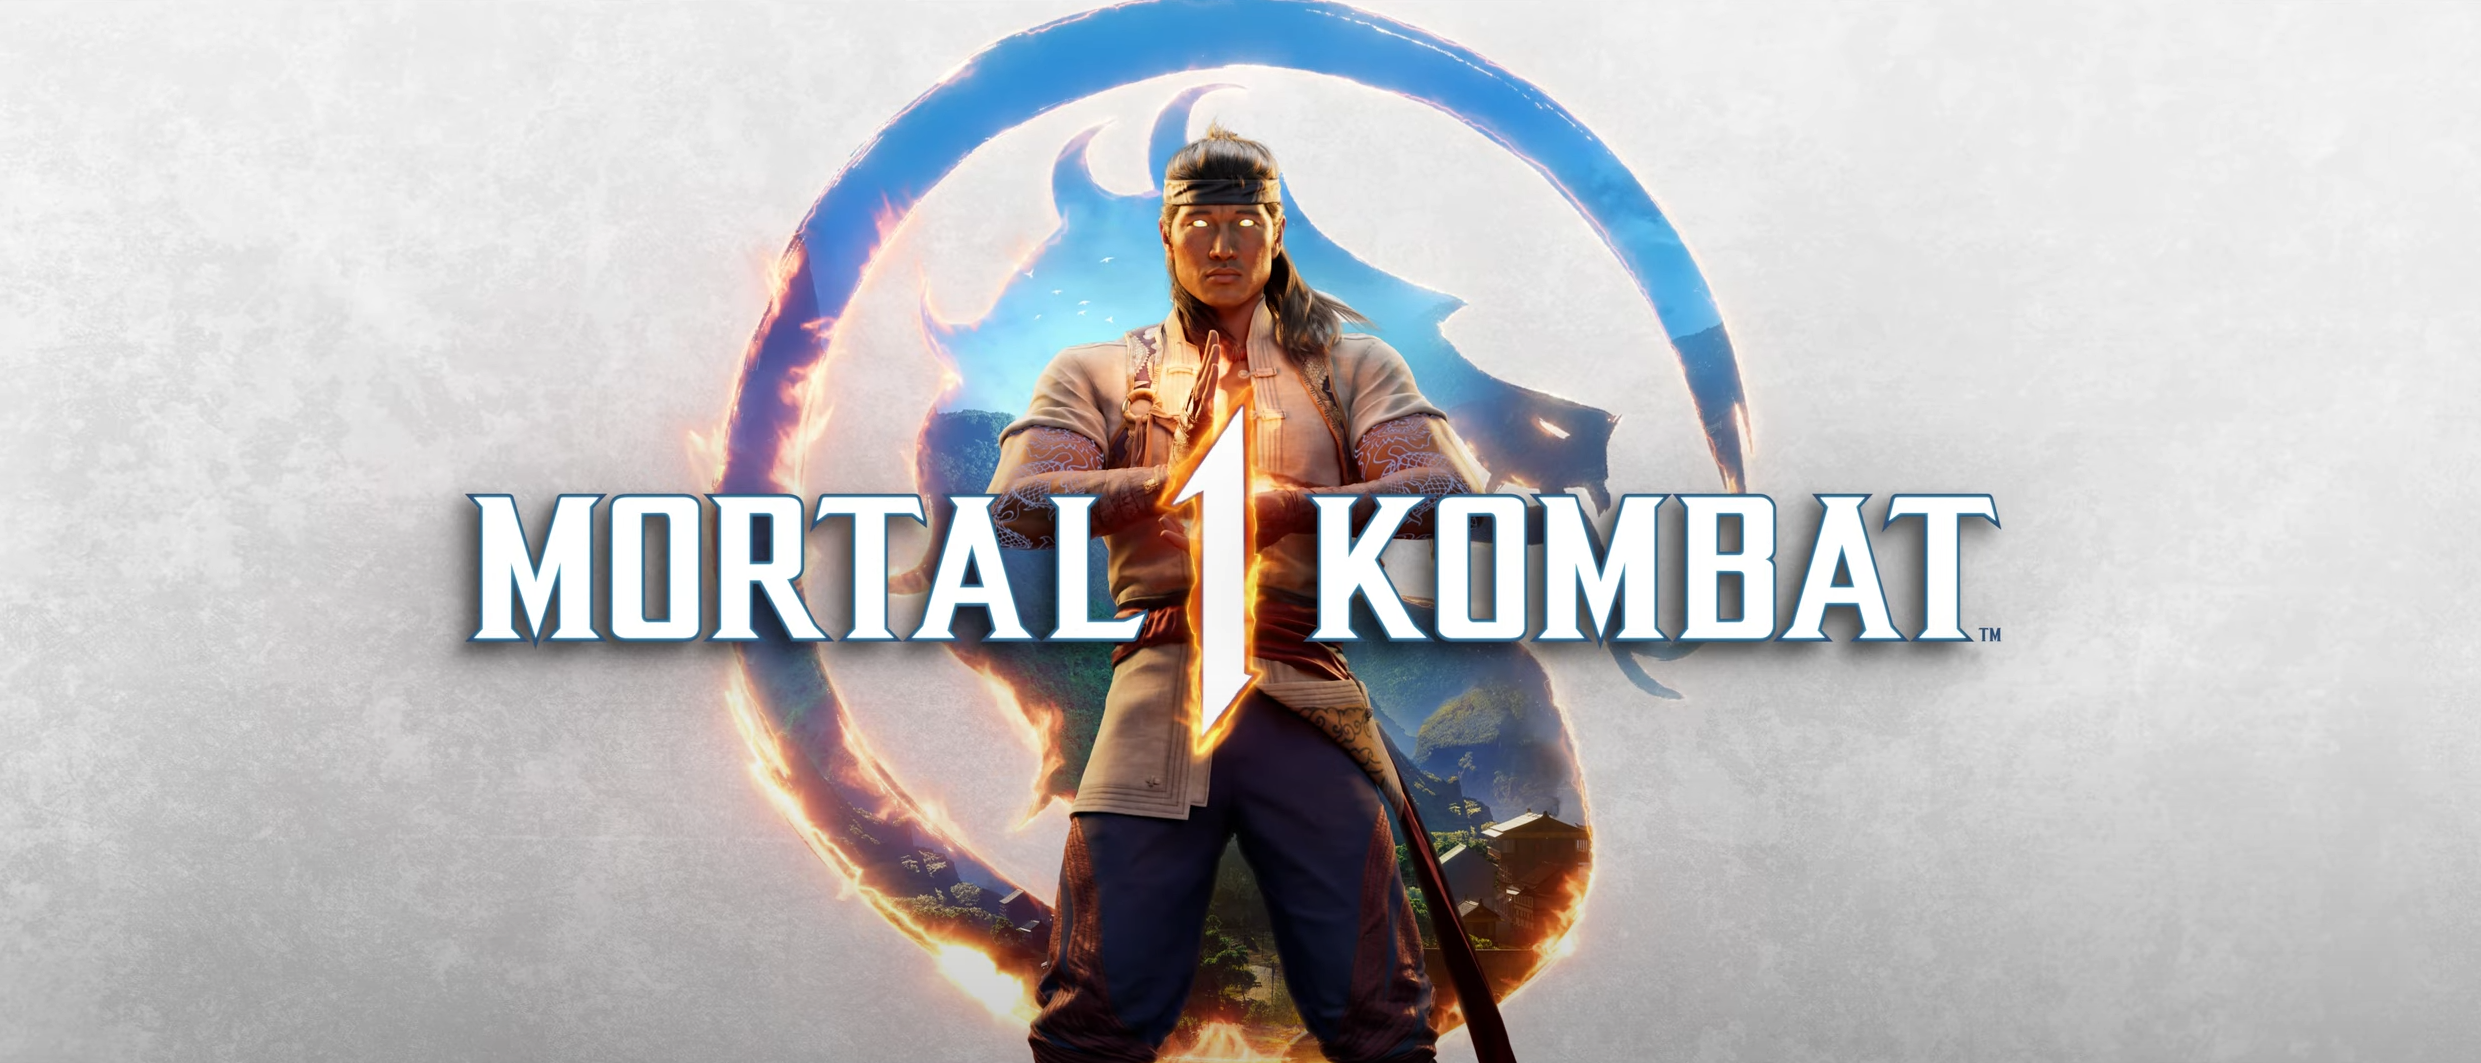 Cover art for Mortal Kombat 1 featuring the logo and character Liu Kang